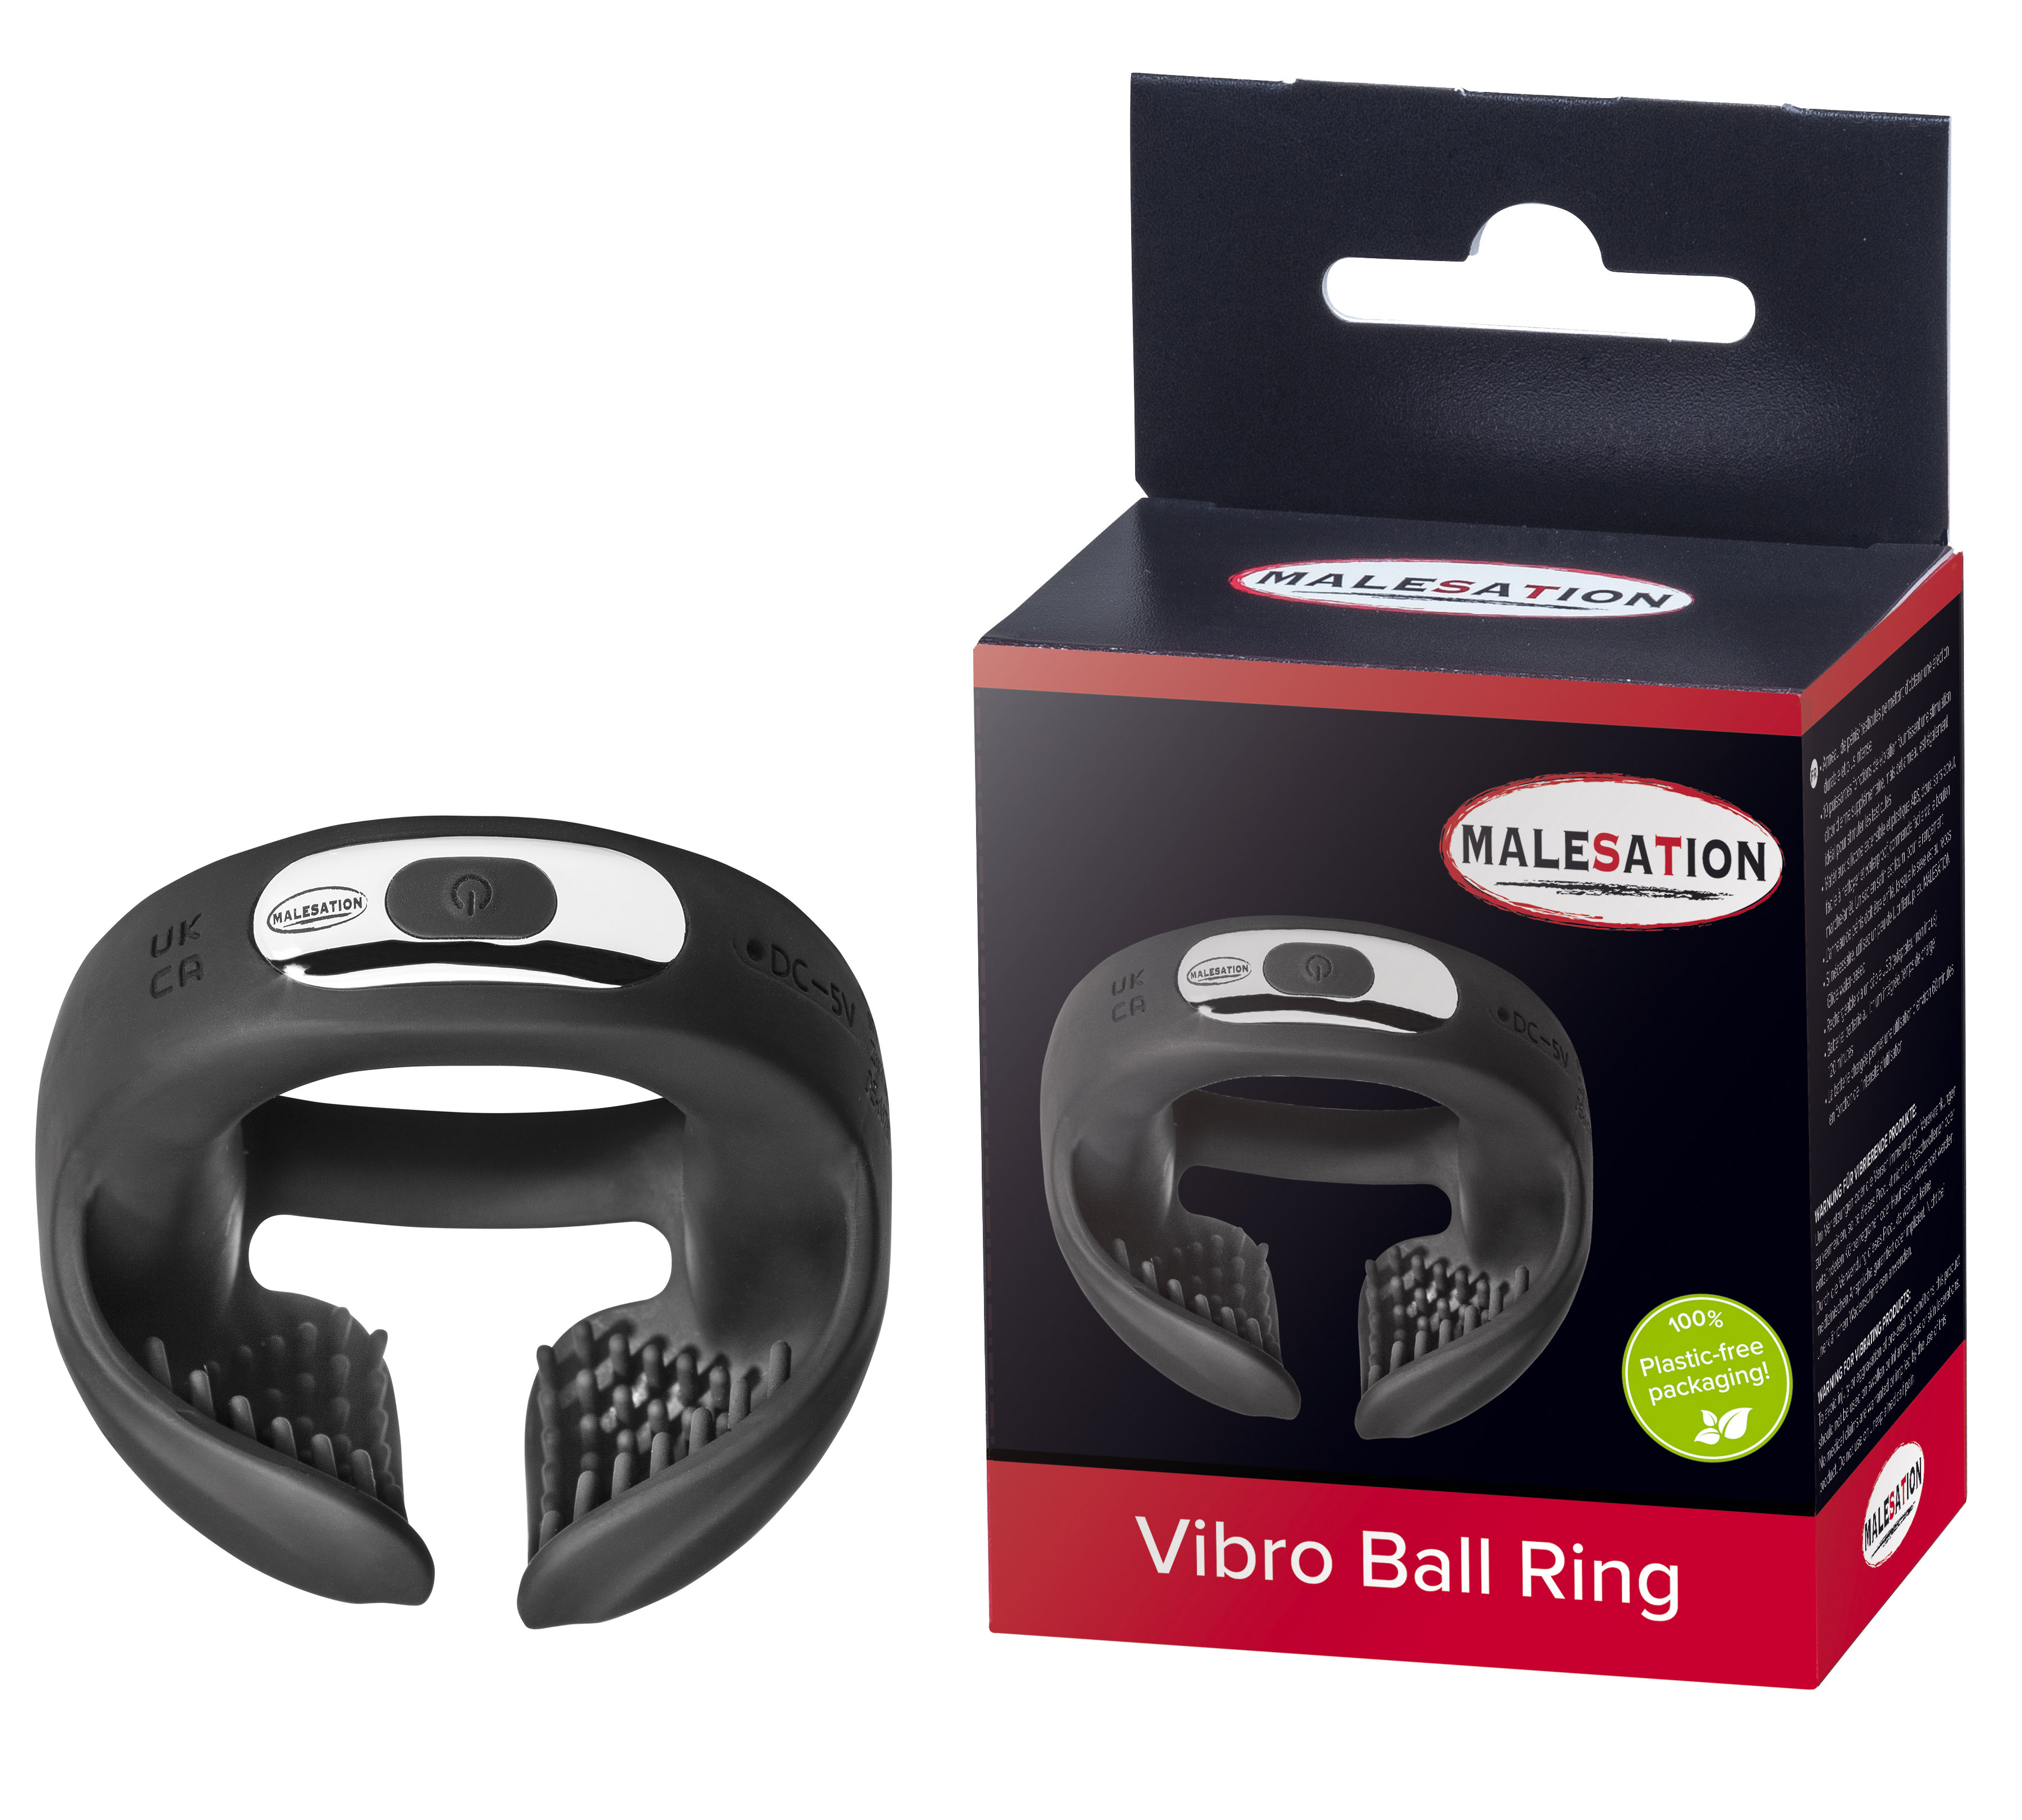 MALESATION Vibro Ball Ring